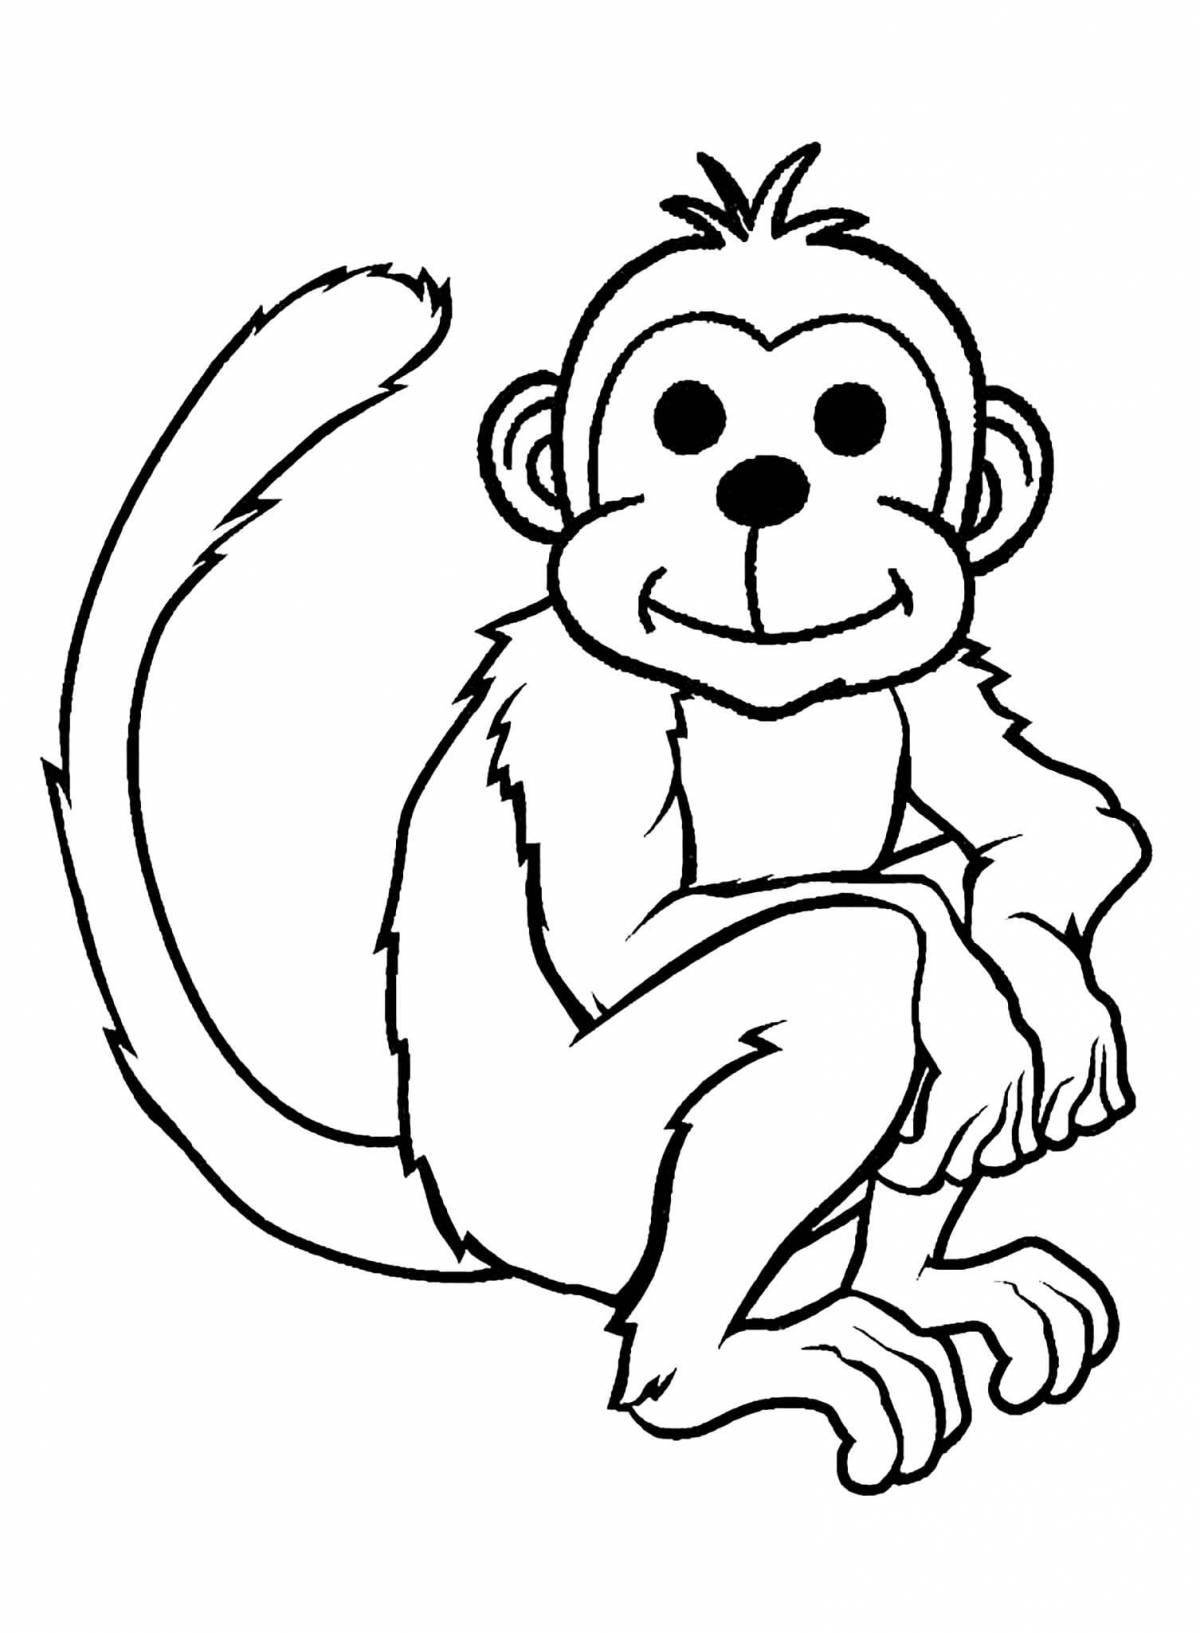 Радостная раскраска обезьяна для детей